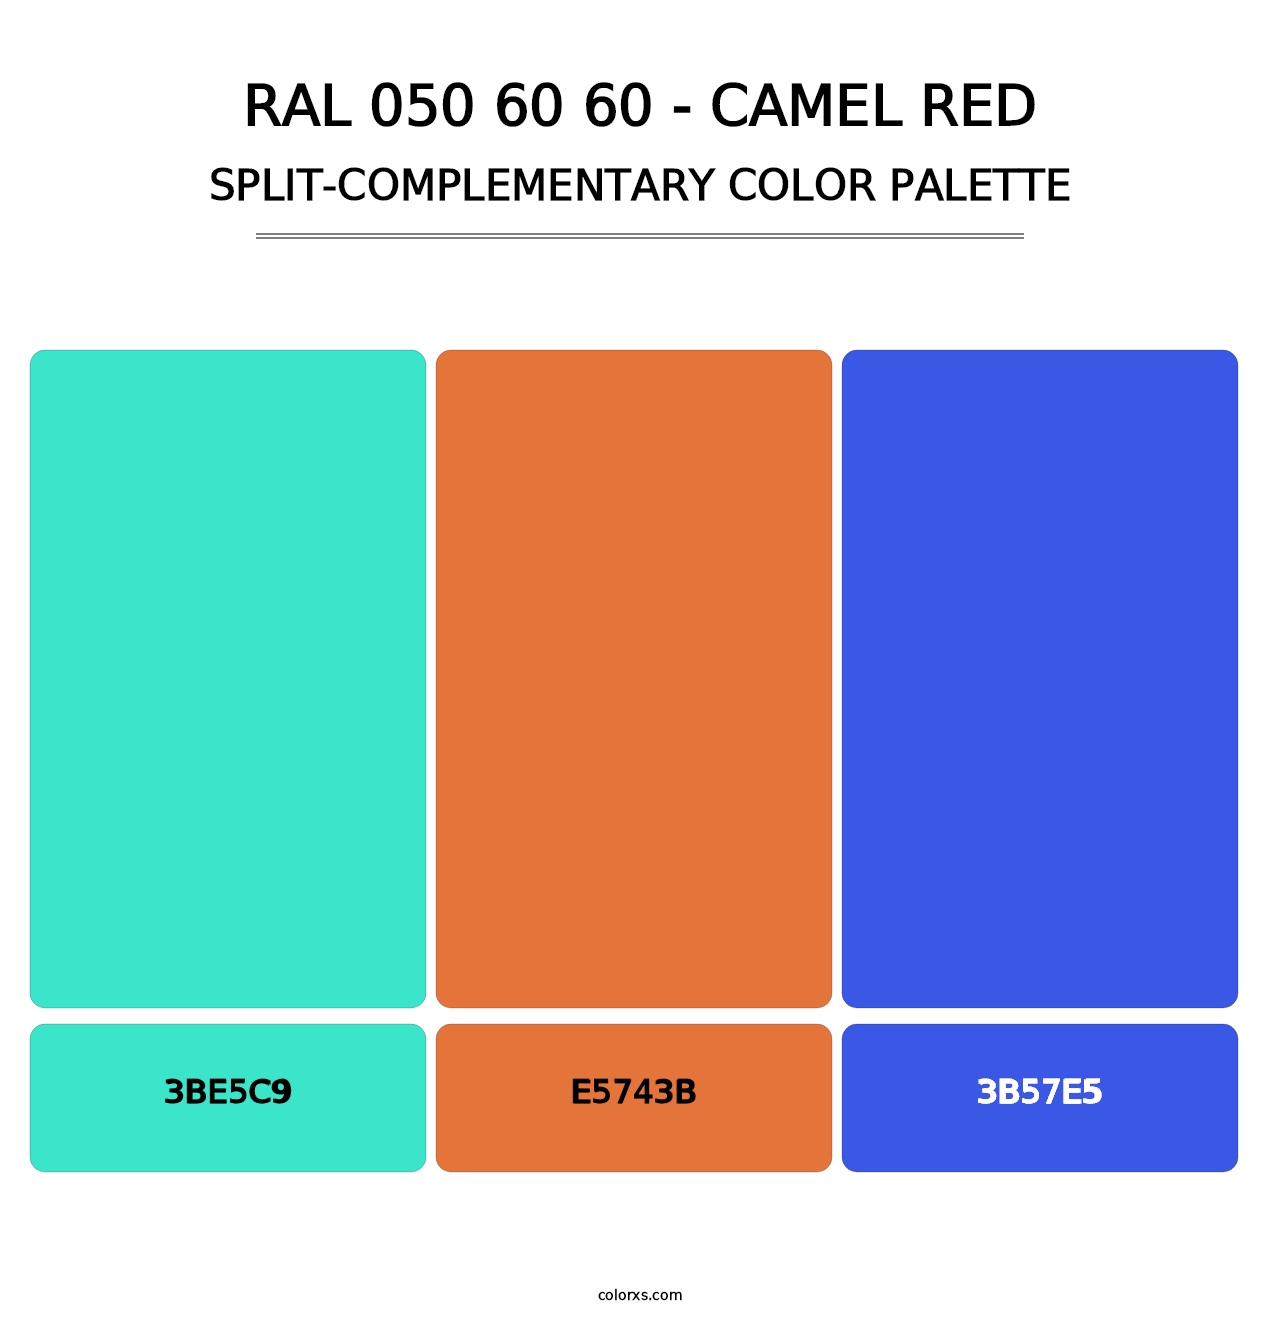 RAL 050 60 60 - Camel Red - Split-Complementary Color Palette